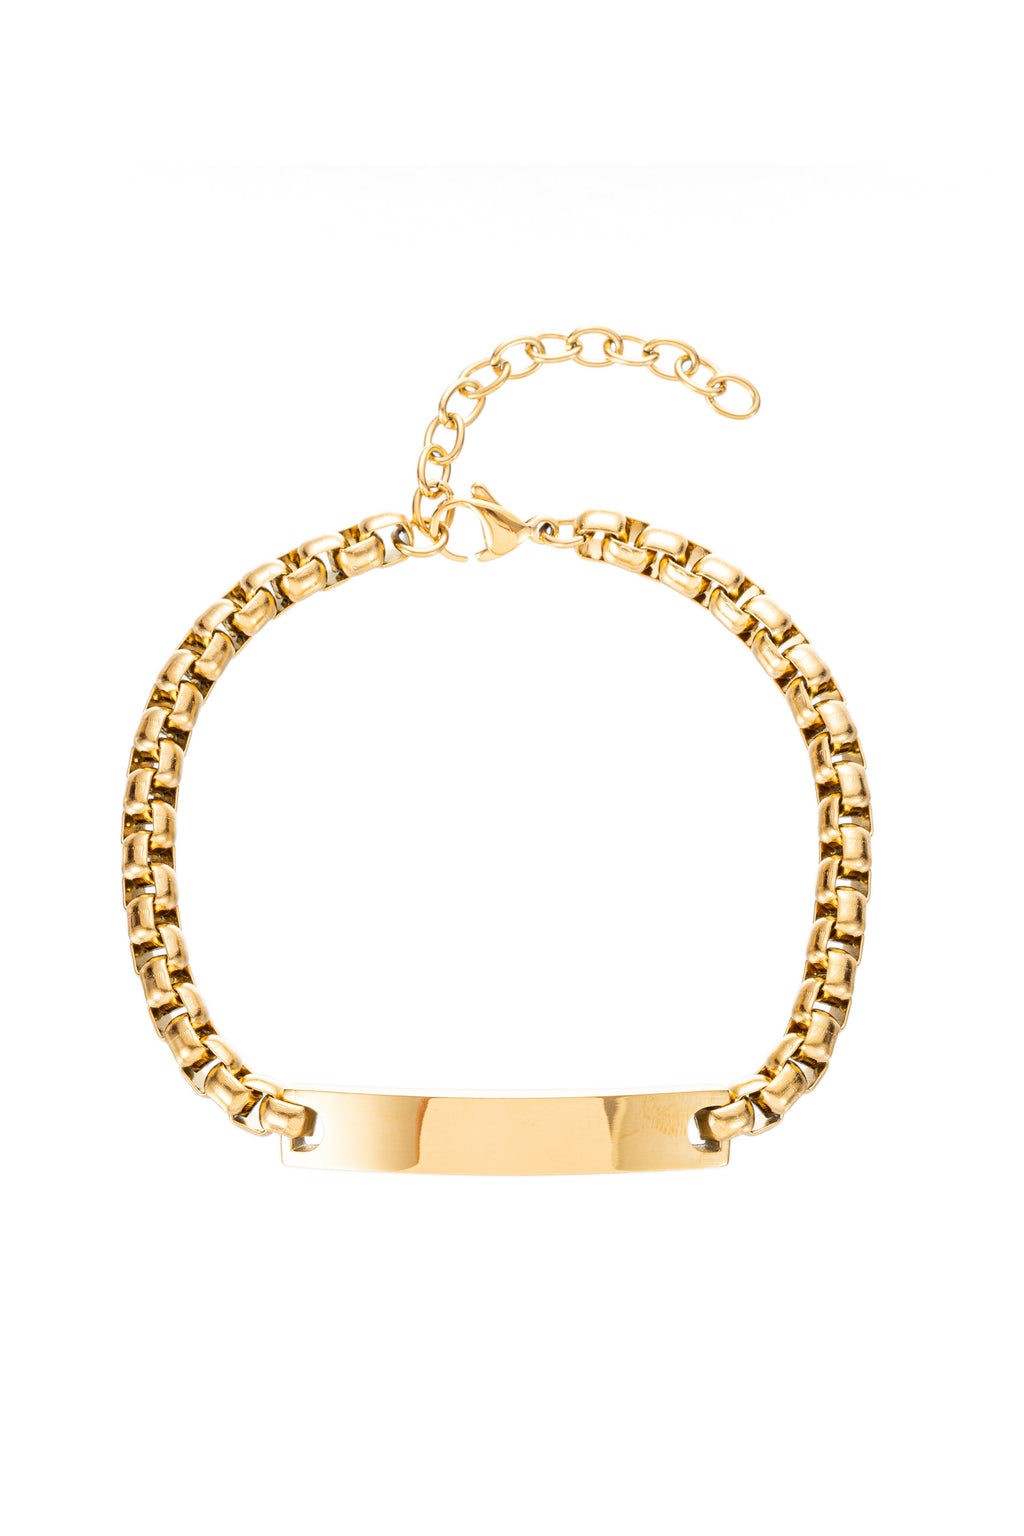 Gold titanium bar pendant bracelet.